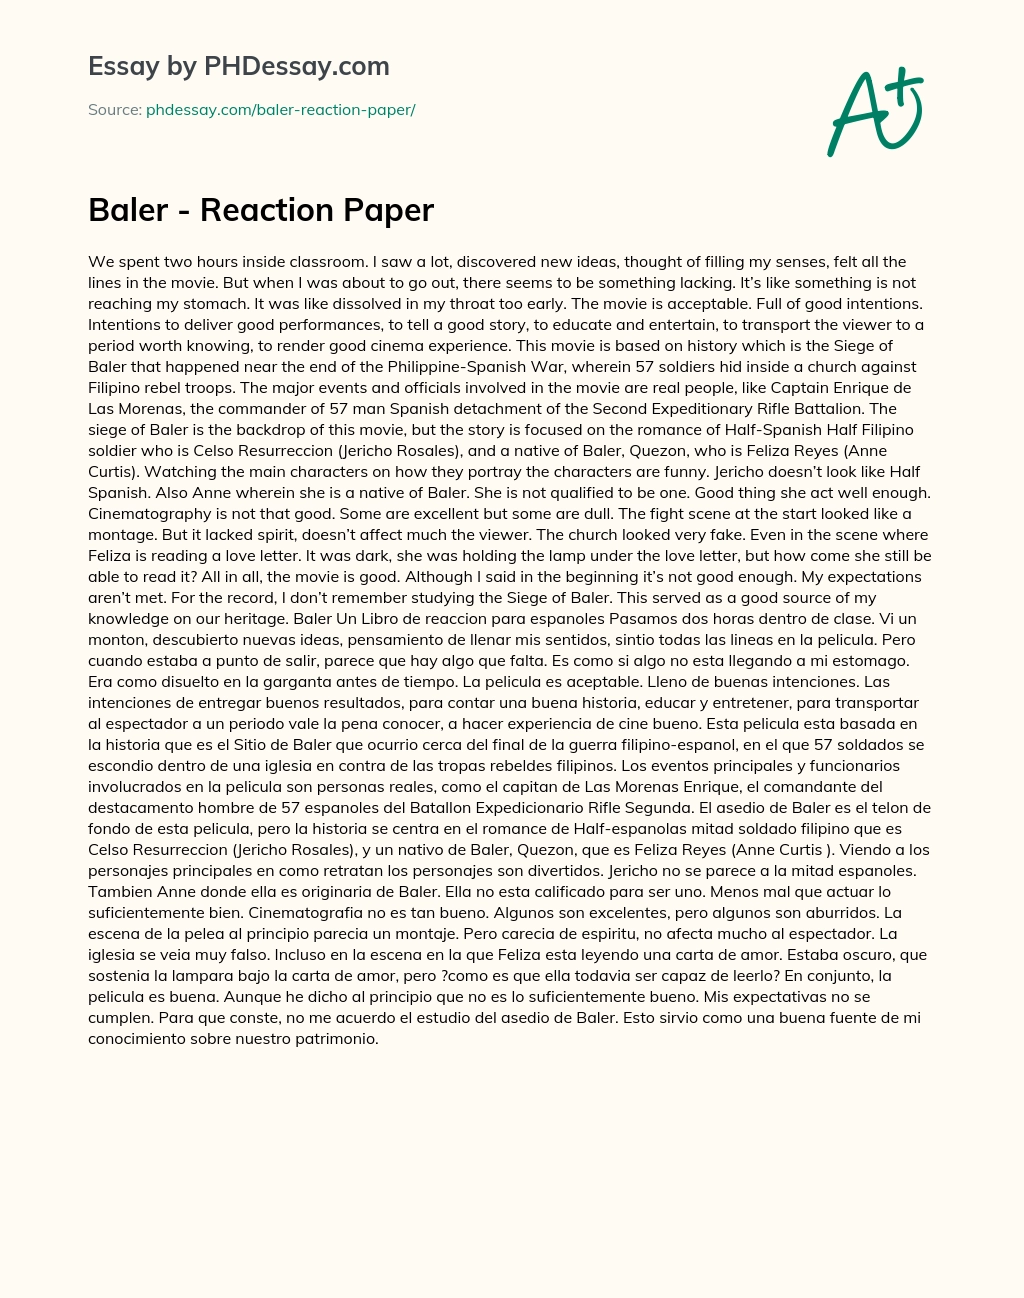 Baler – Reaction Paper essay